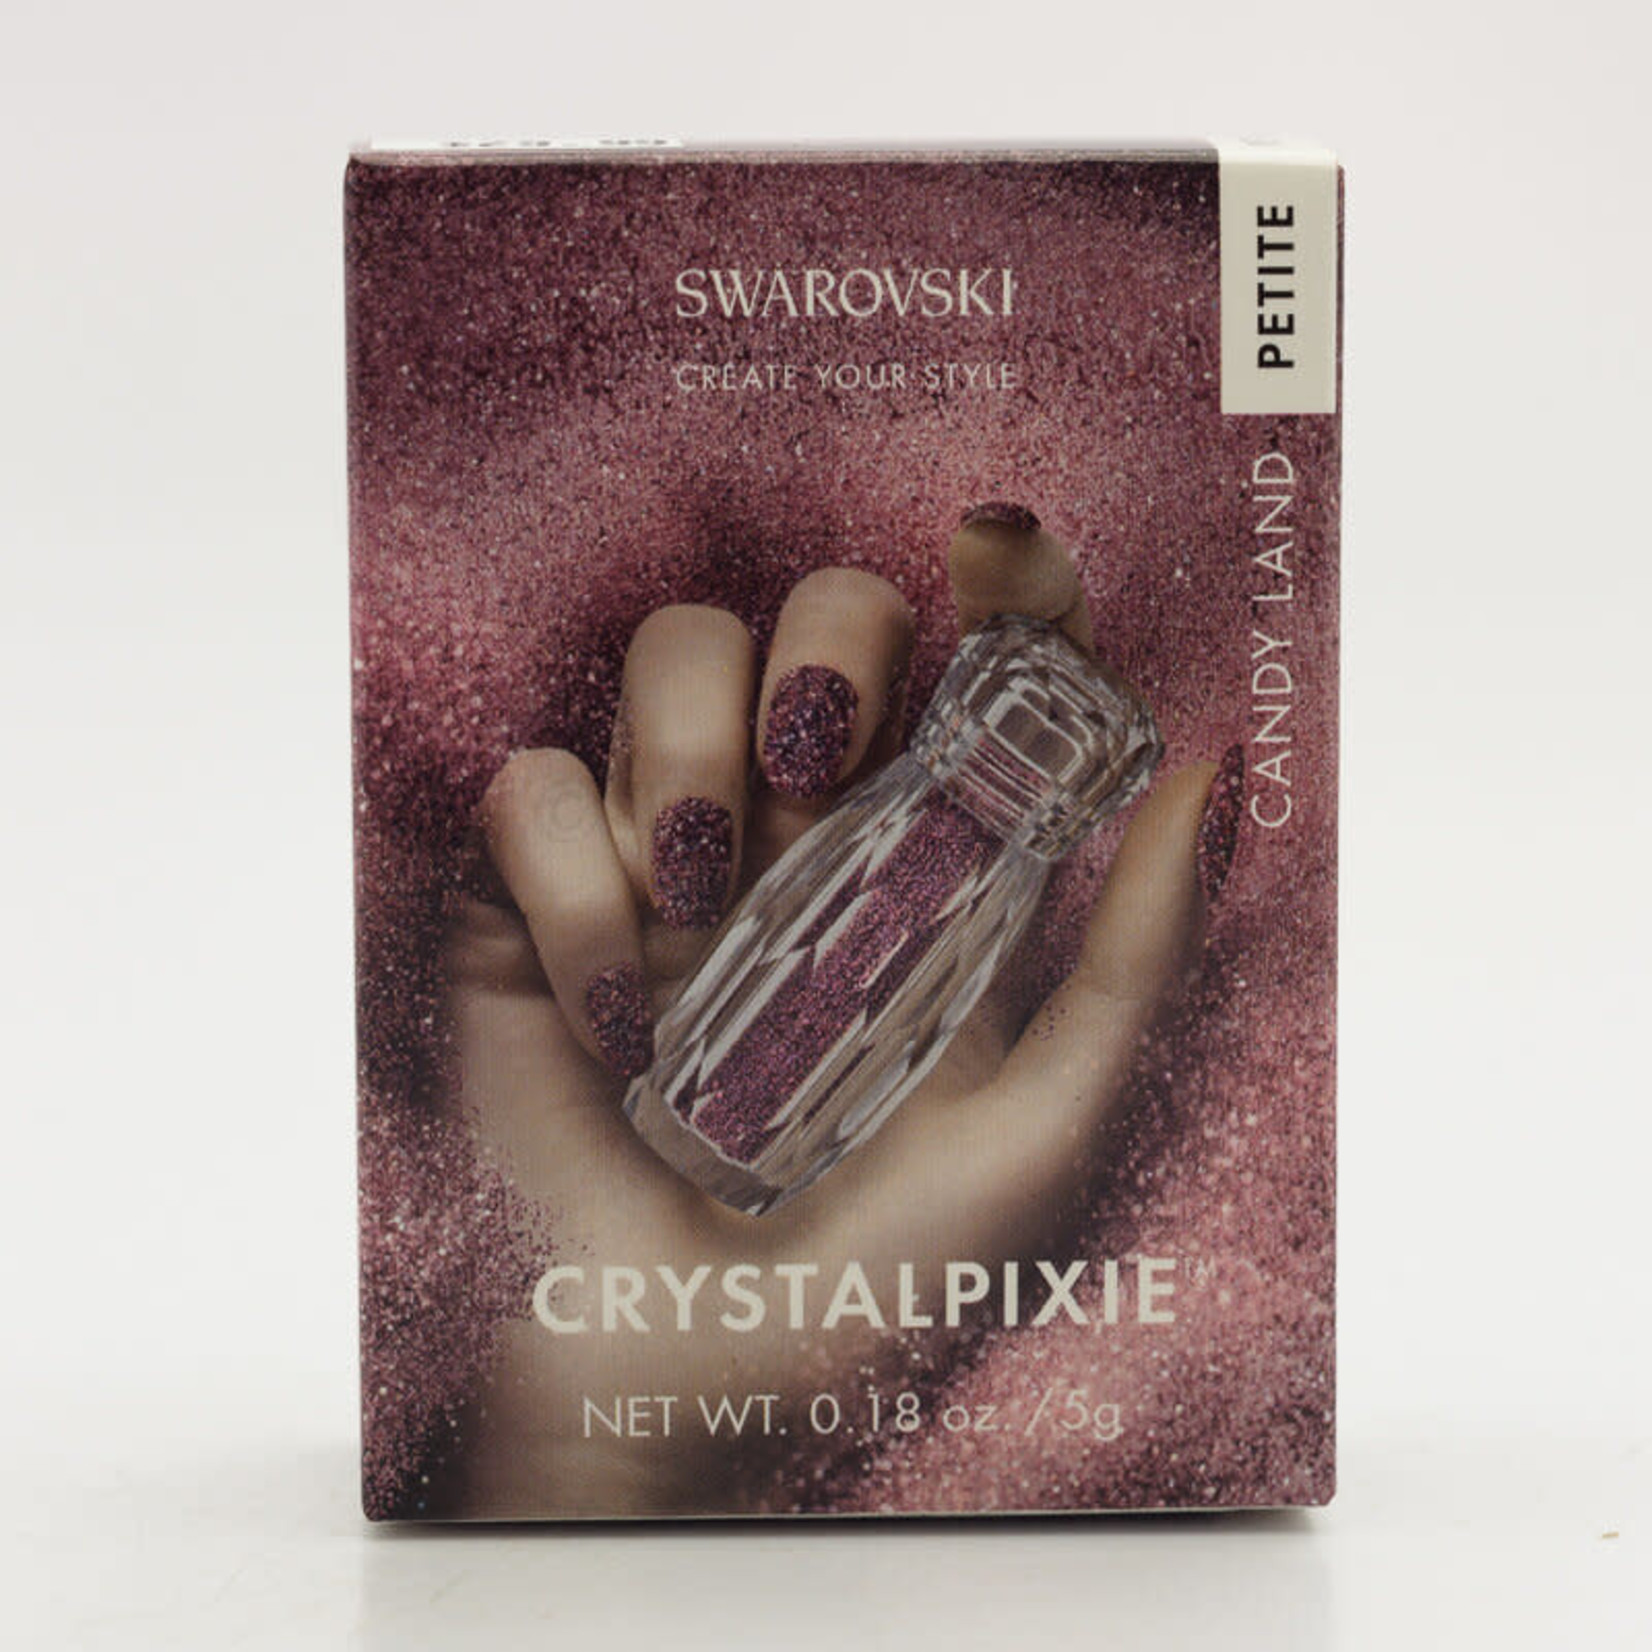 Swarovski Swarovski - Crystalpixie - Petite - Candy Land - 5g